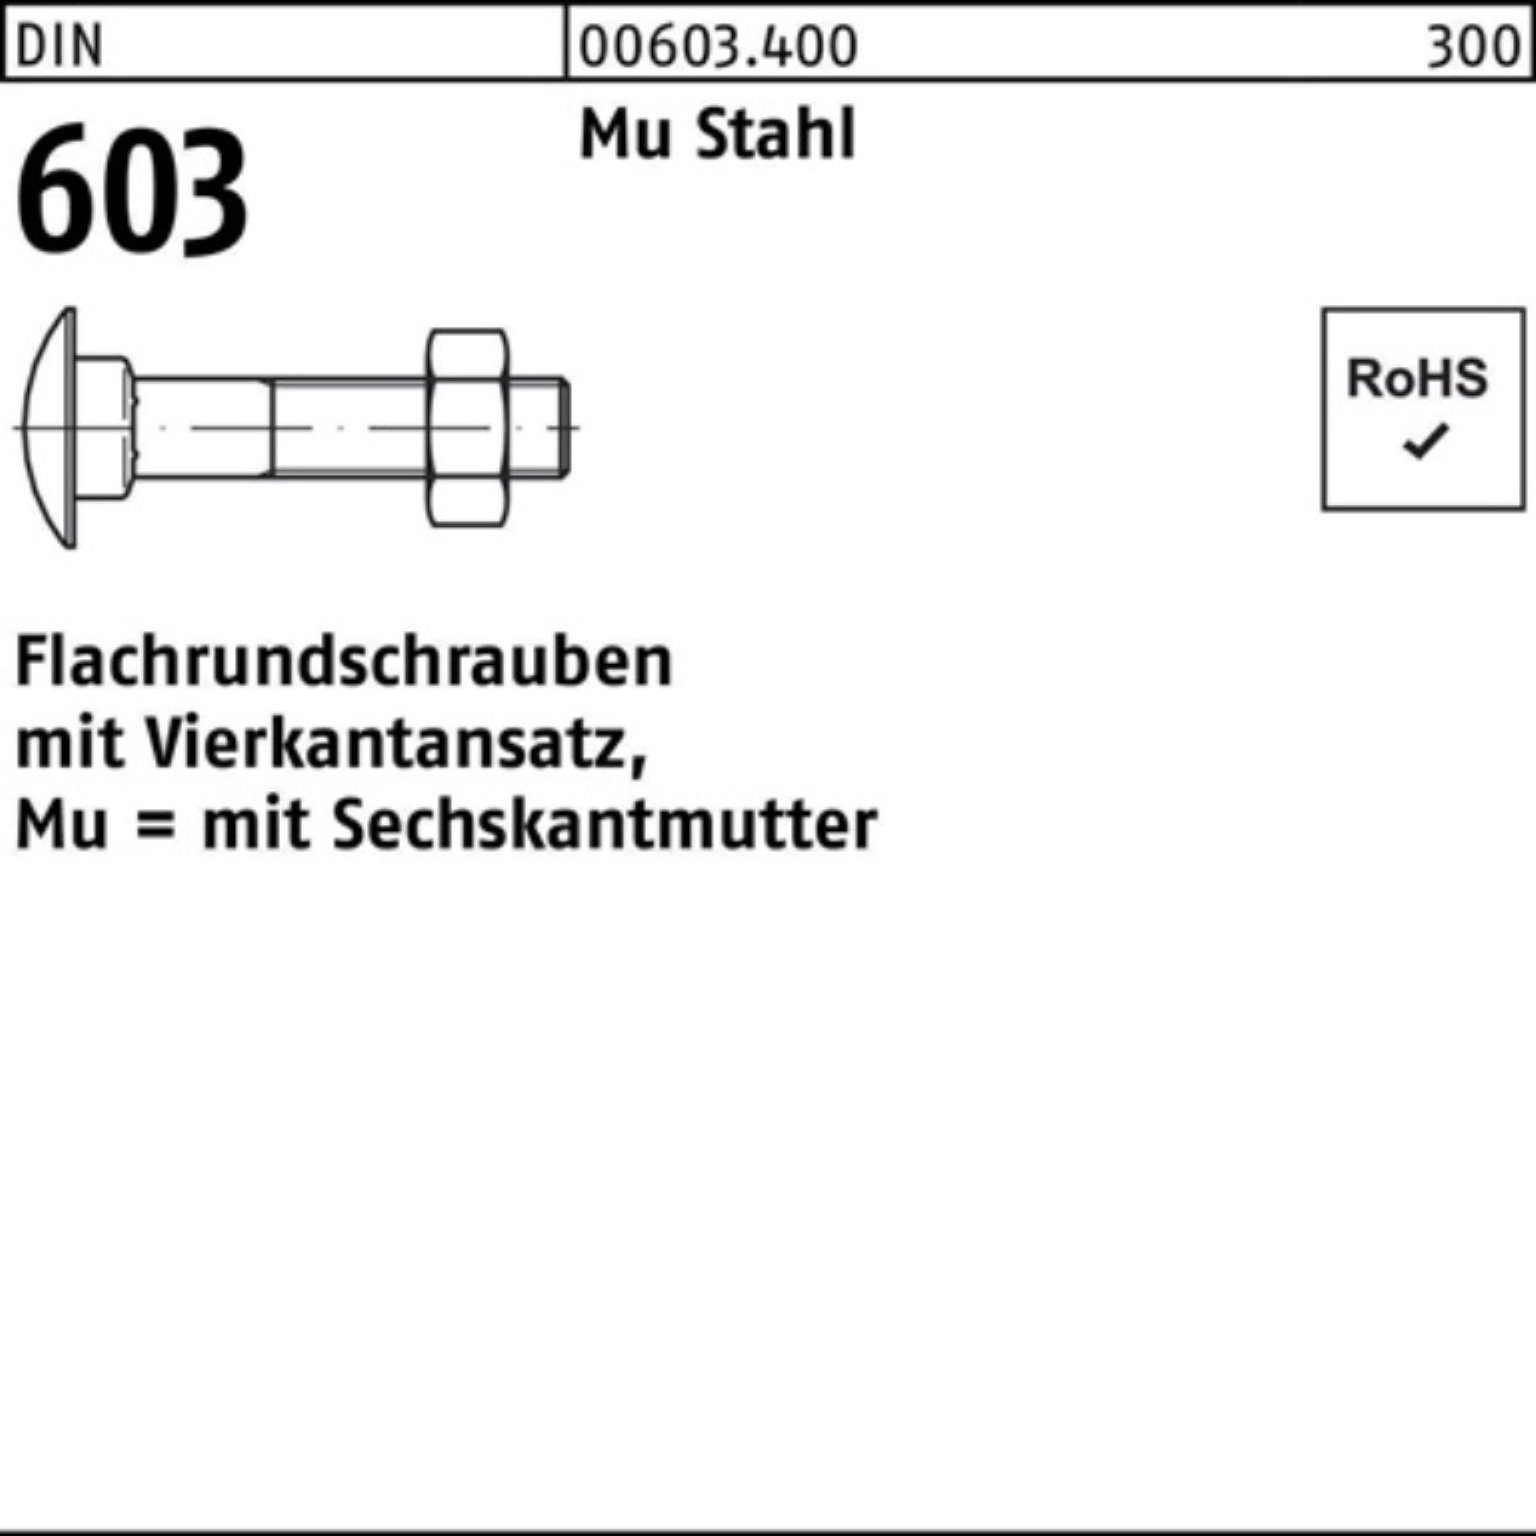 Reyher Schraube 100er Vierkantansatz/6-ktmutter 603 Flachrundschraube DIN Pack M12x130